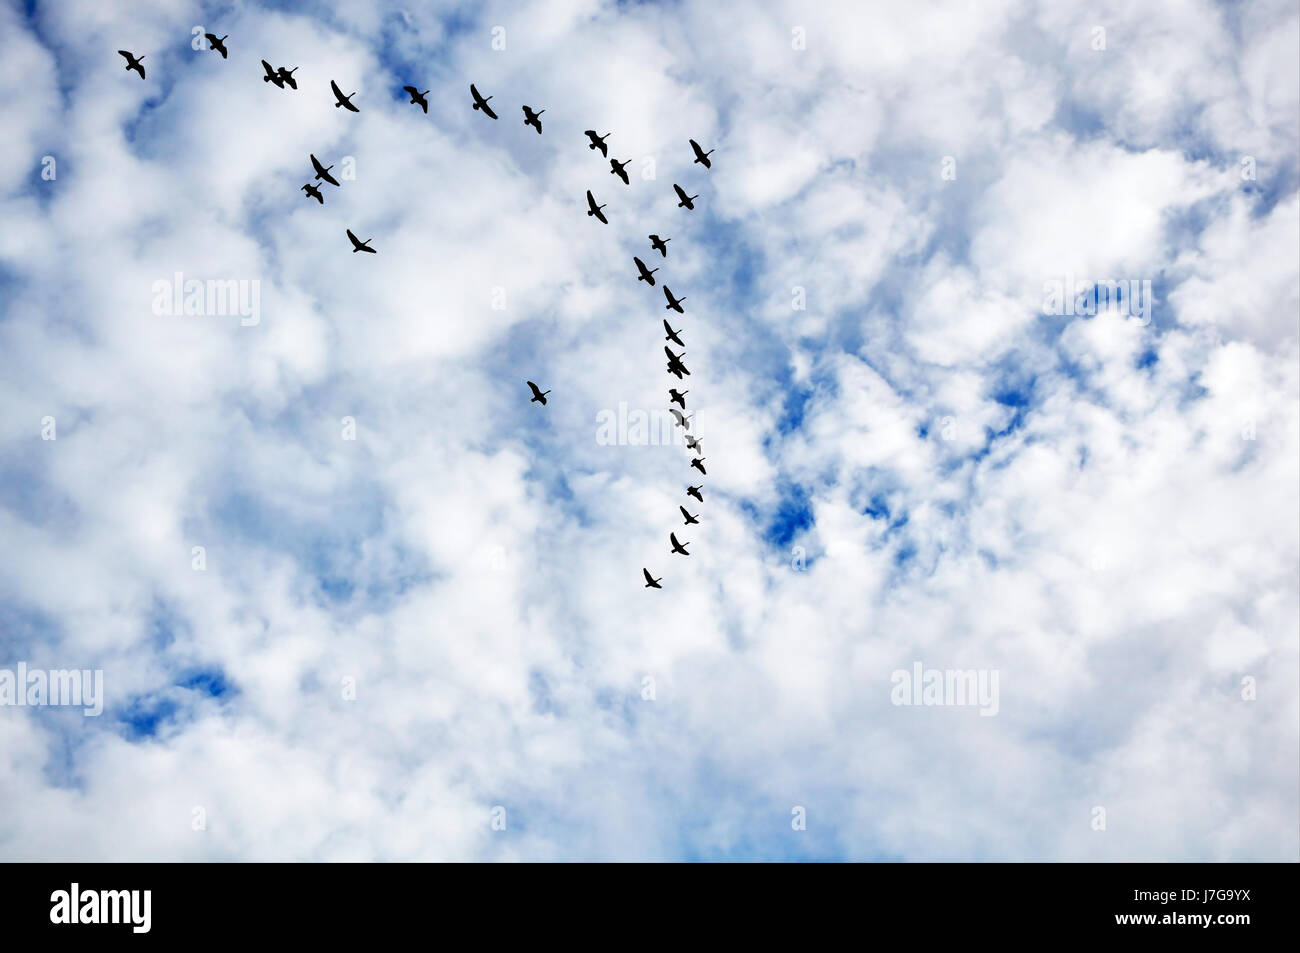 flight animal bird geese season migration immigration nature blue beautiful Stock Photo